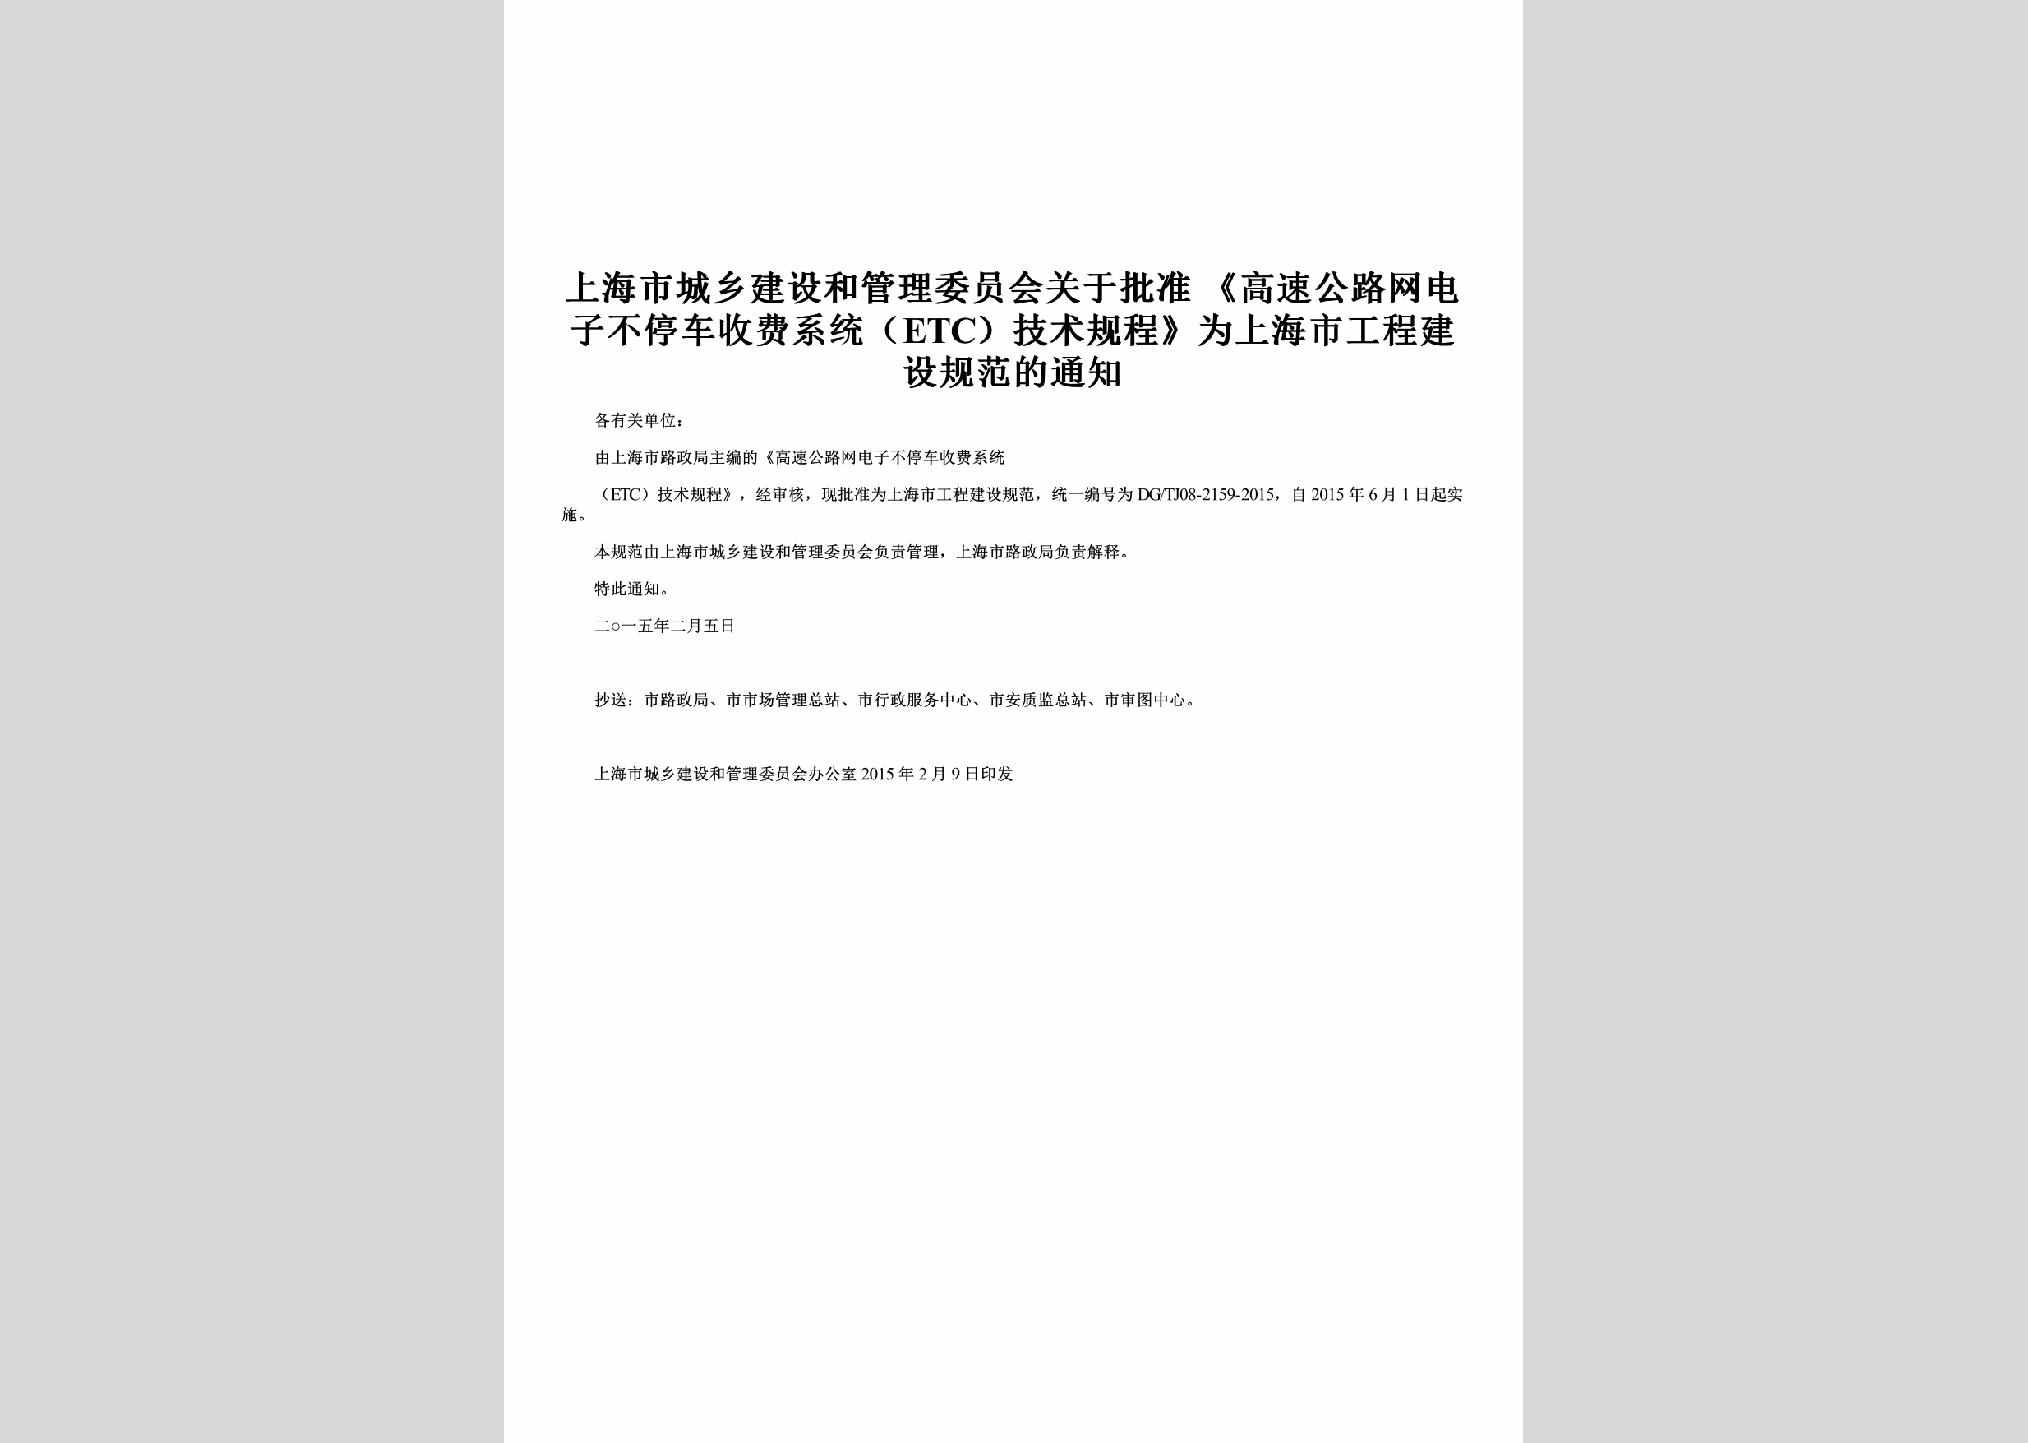 SH-SFXTJSGC-2015：关于批准《高速公路网电子不停车收费系统（ETC）技术规程》为上海市工程建设规范的通知